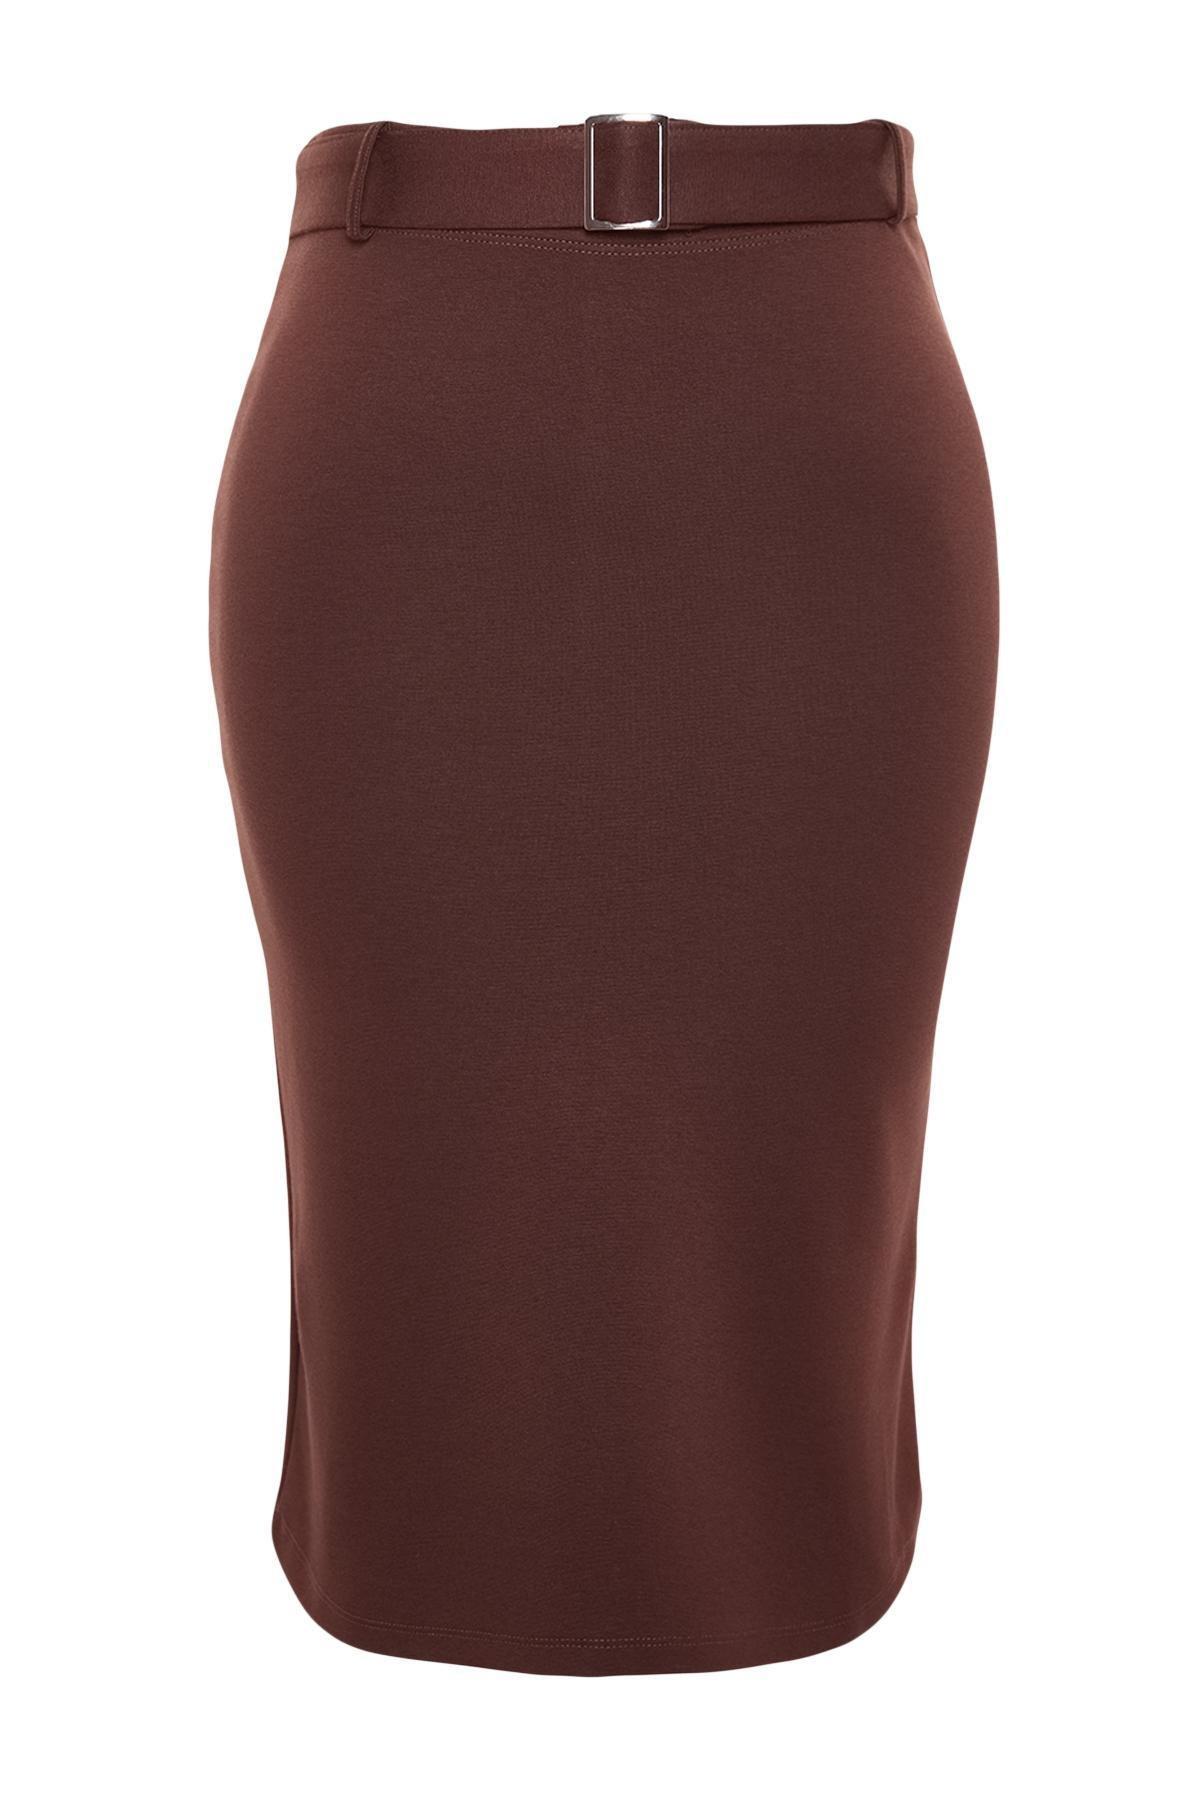 Trendyol - Brown Knitted Pencil Skirt